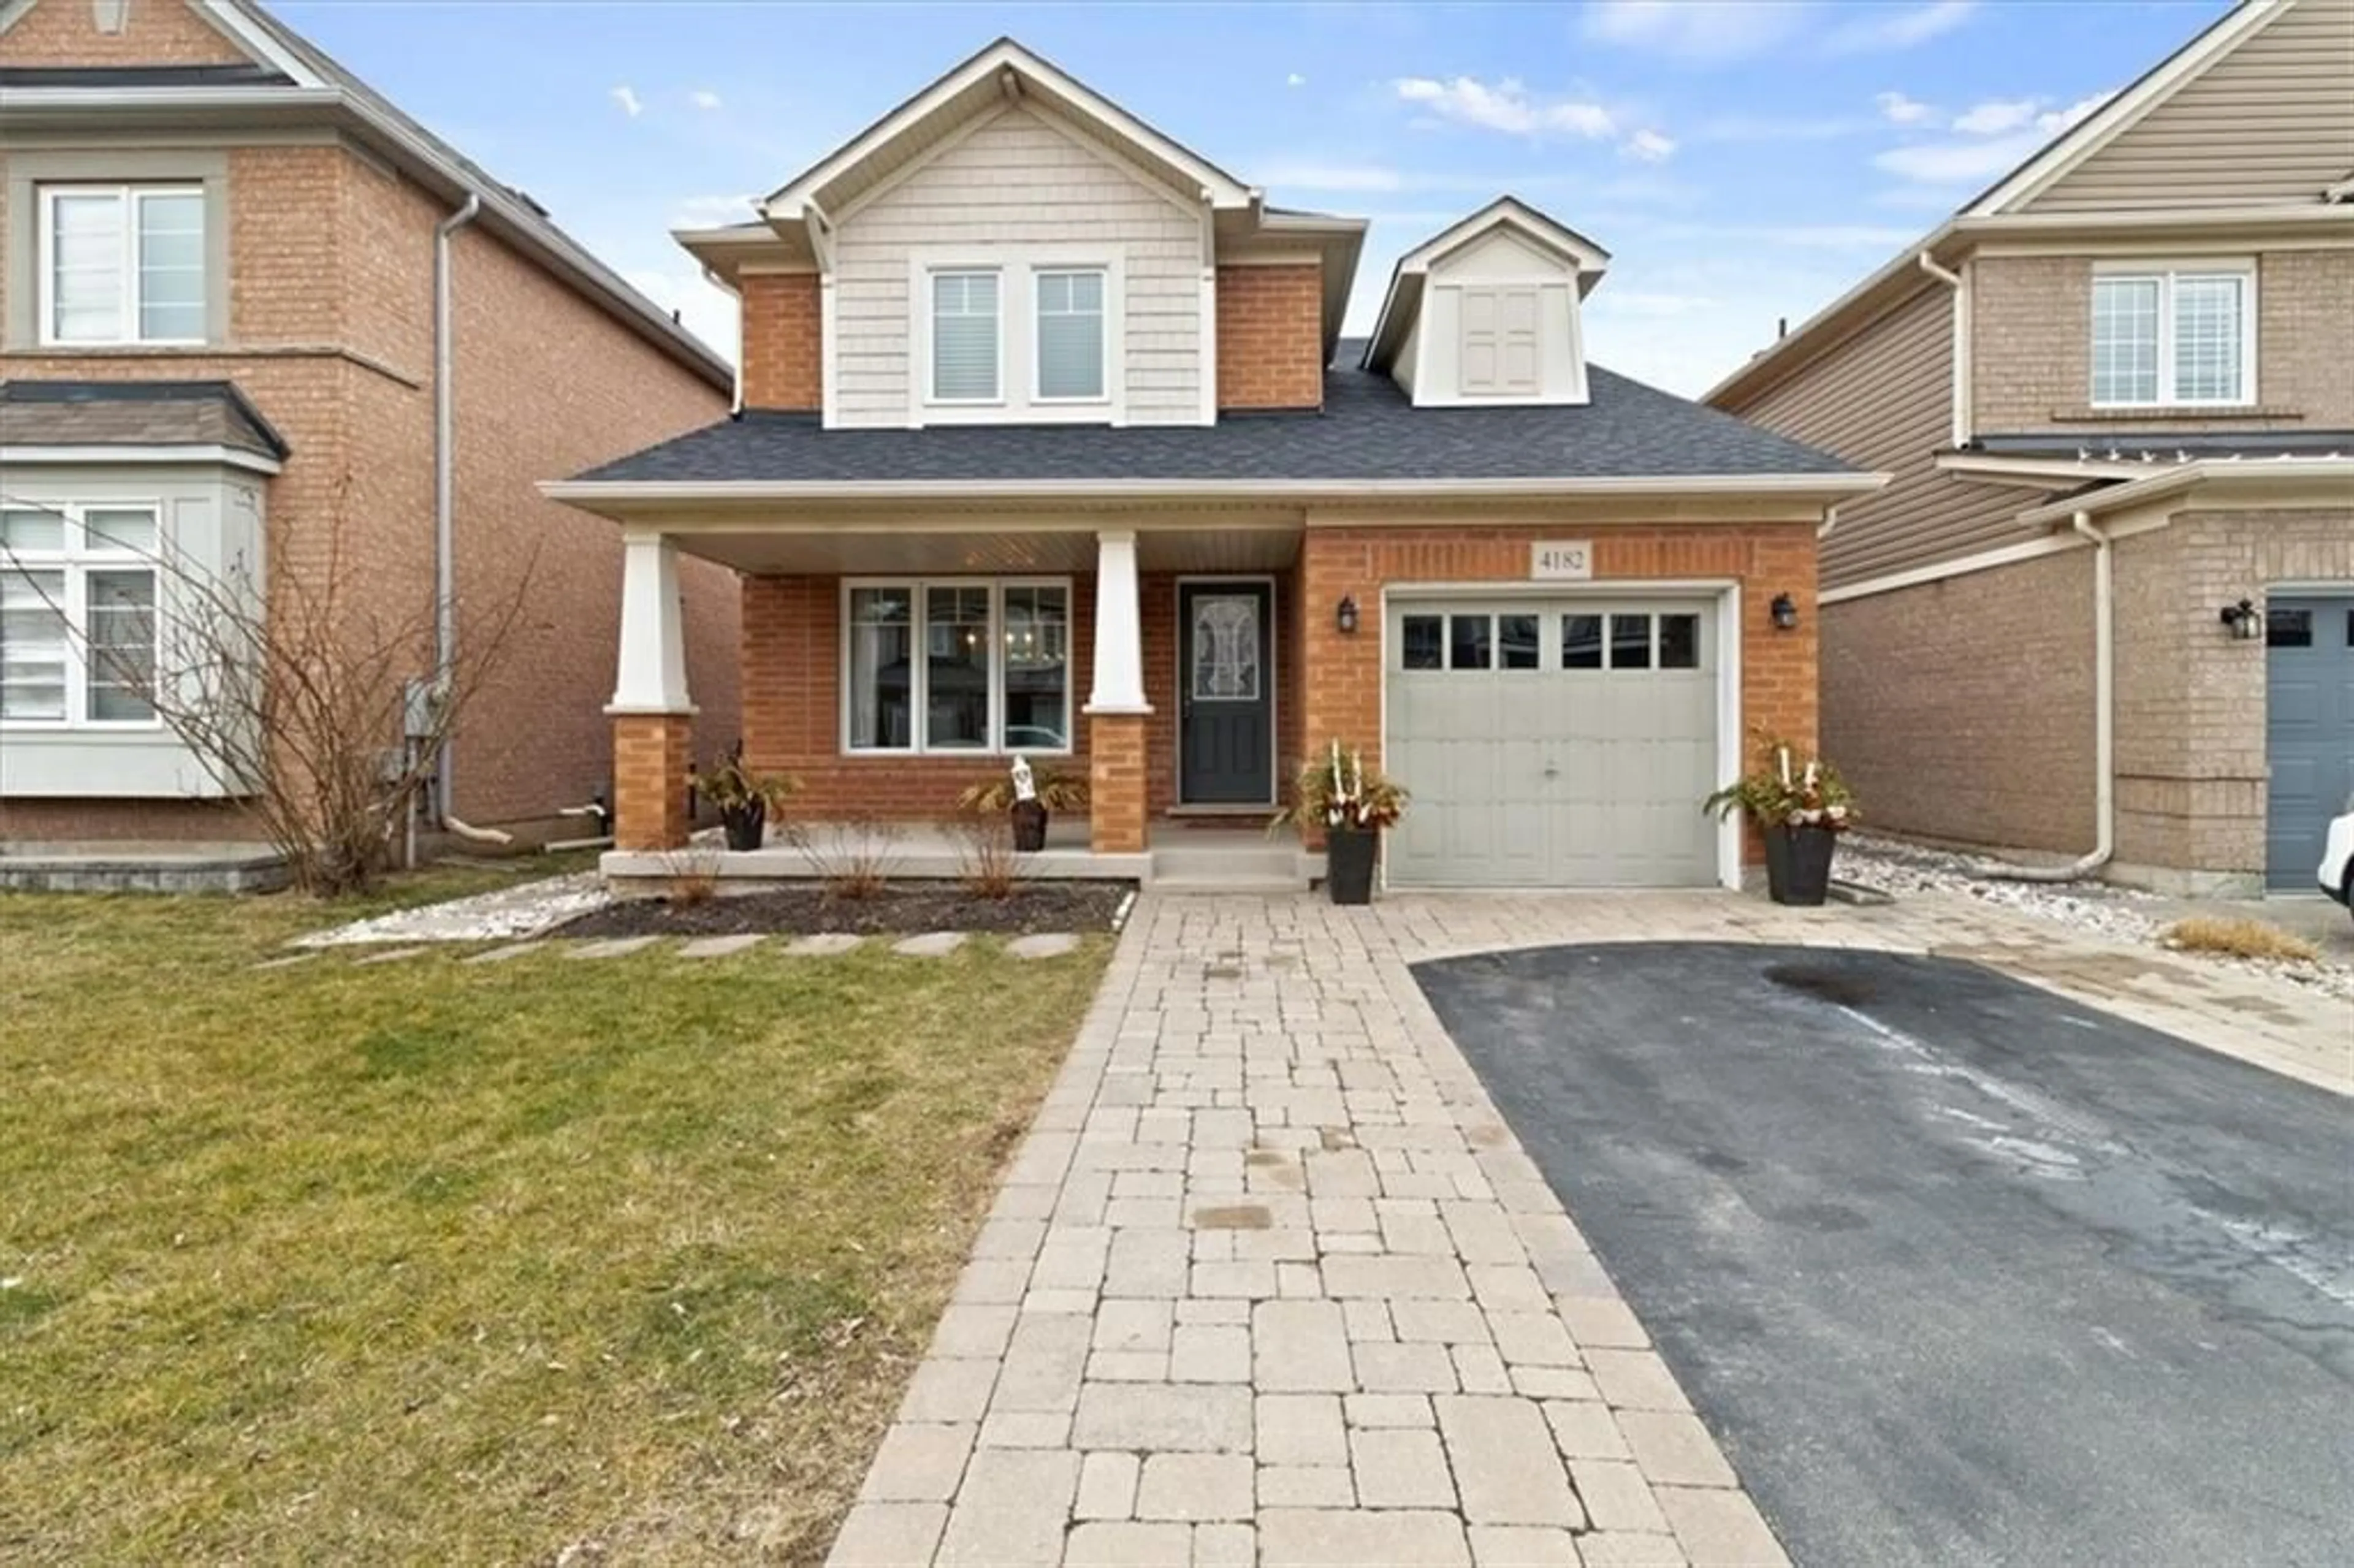 Home with brick exterior material for 4182 PRUDHAM Ave, Burlington Ontario L7M 0C3